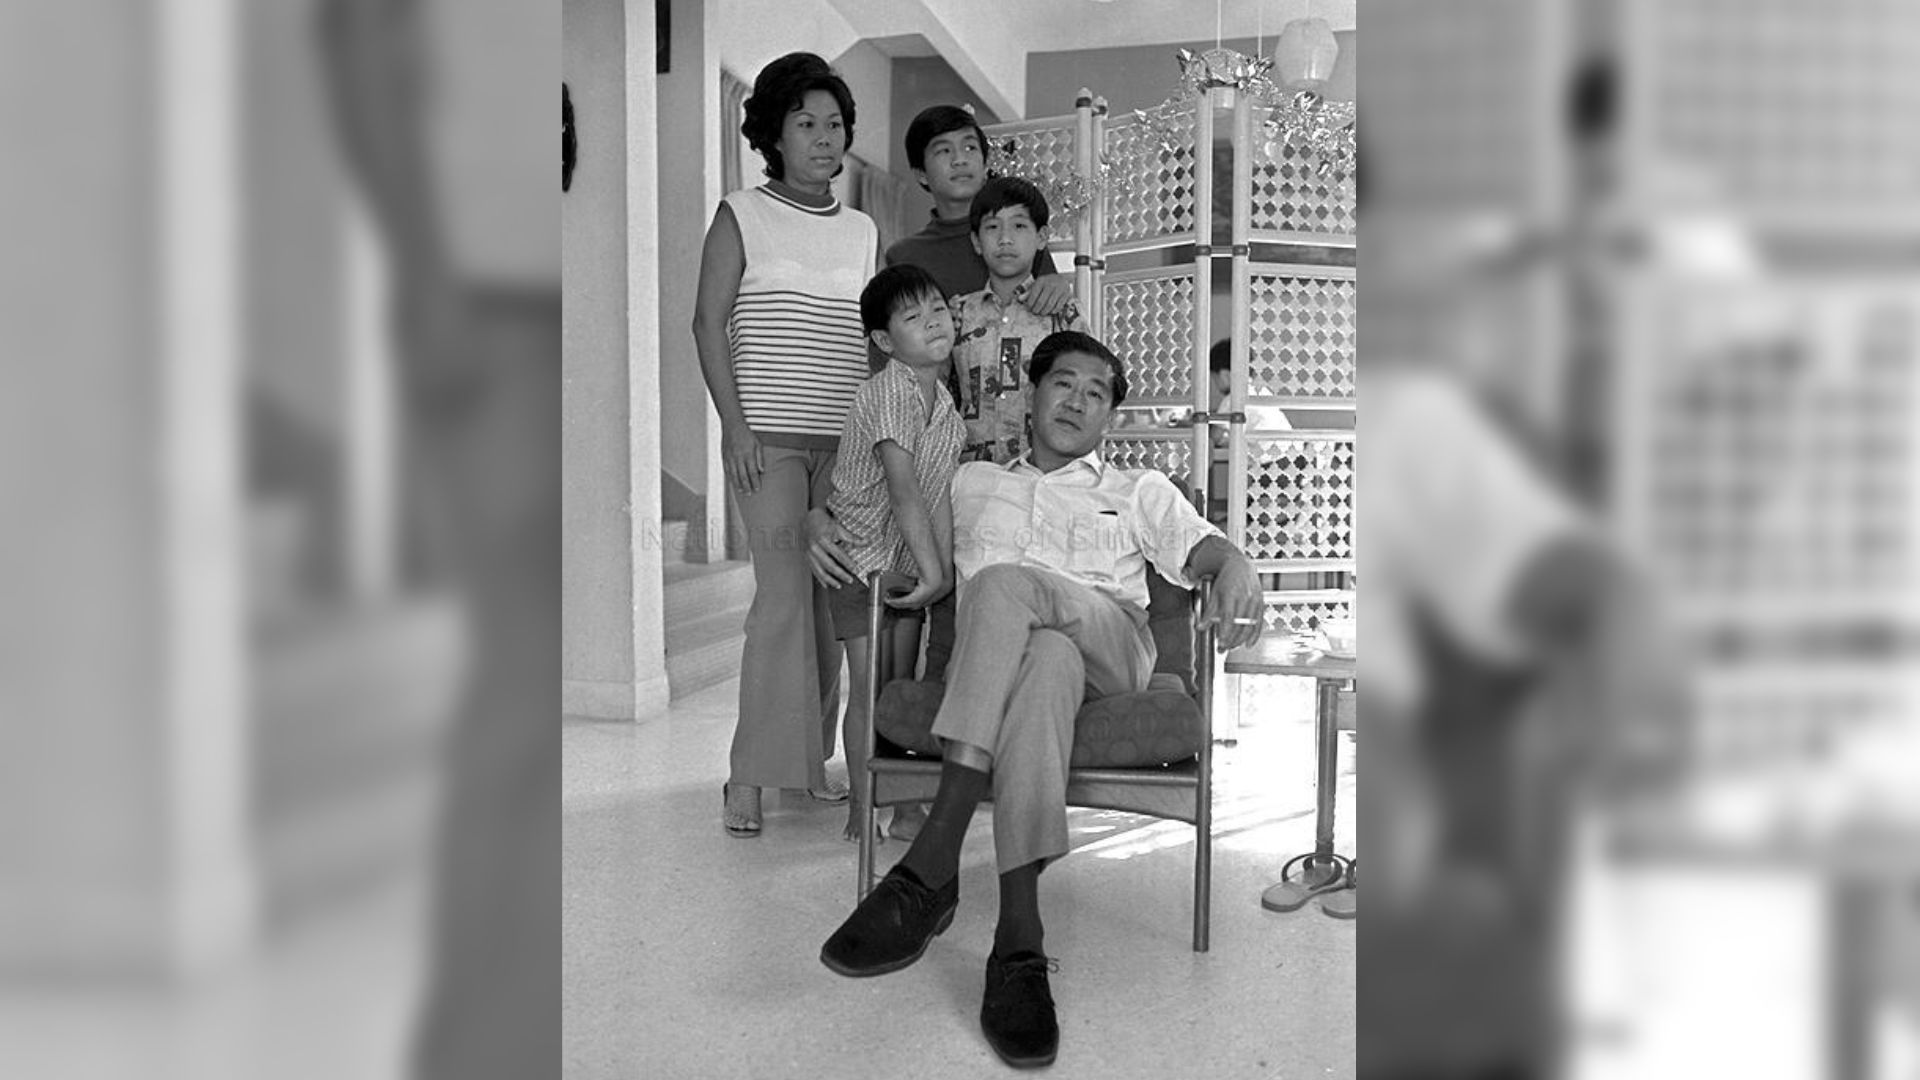 Top civil servant Sim Kee Boon sacrificed family for country, book says